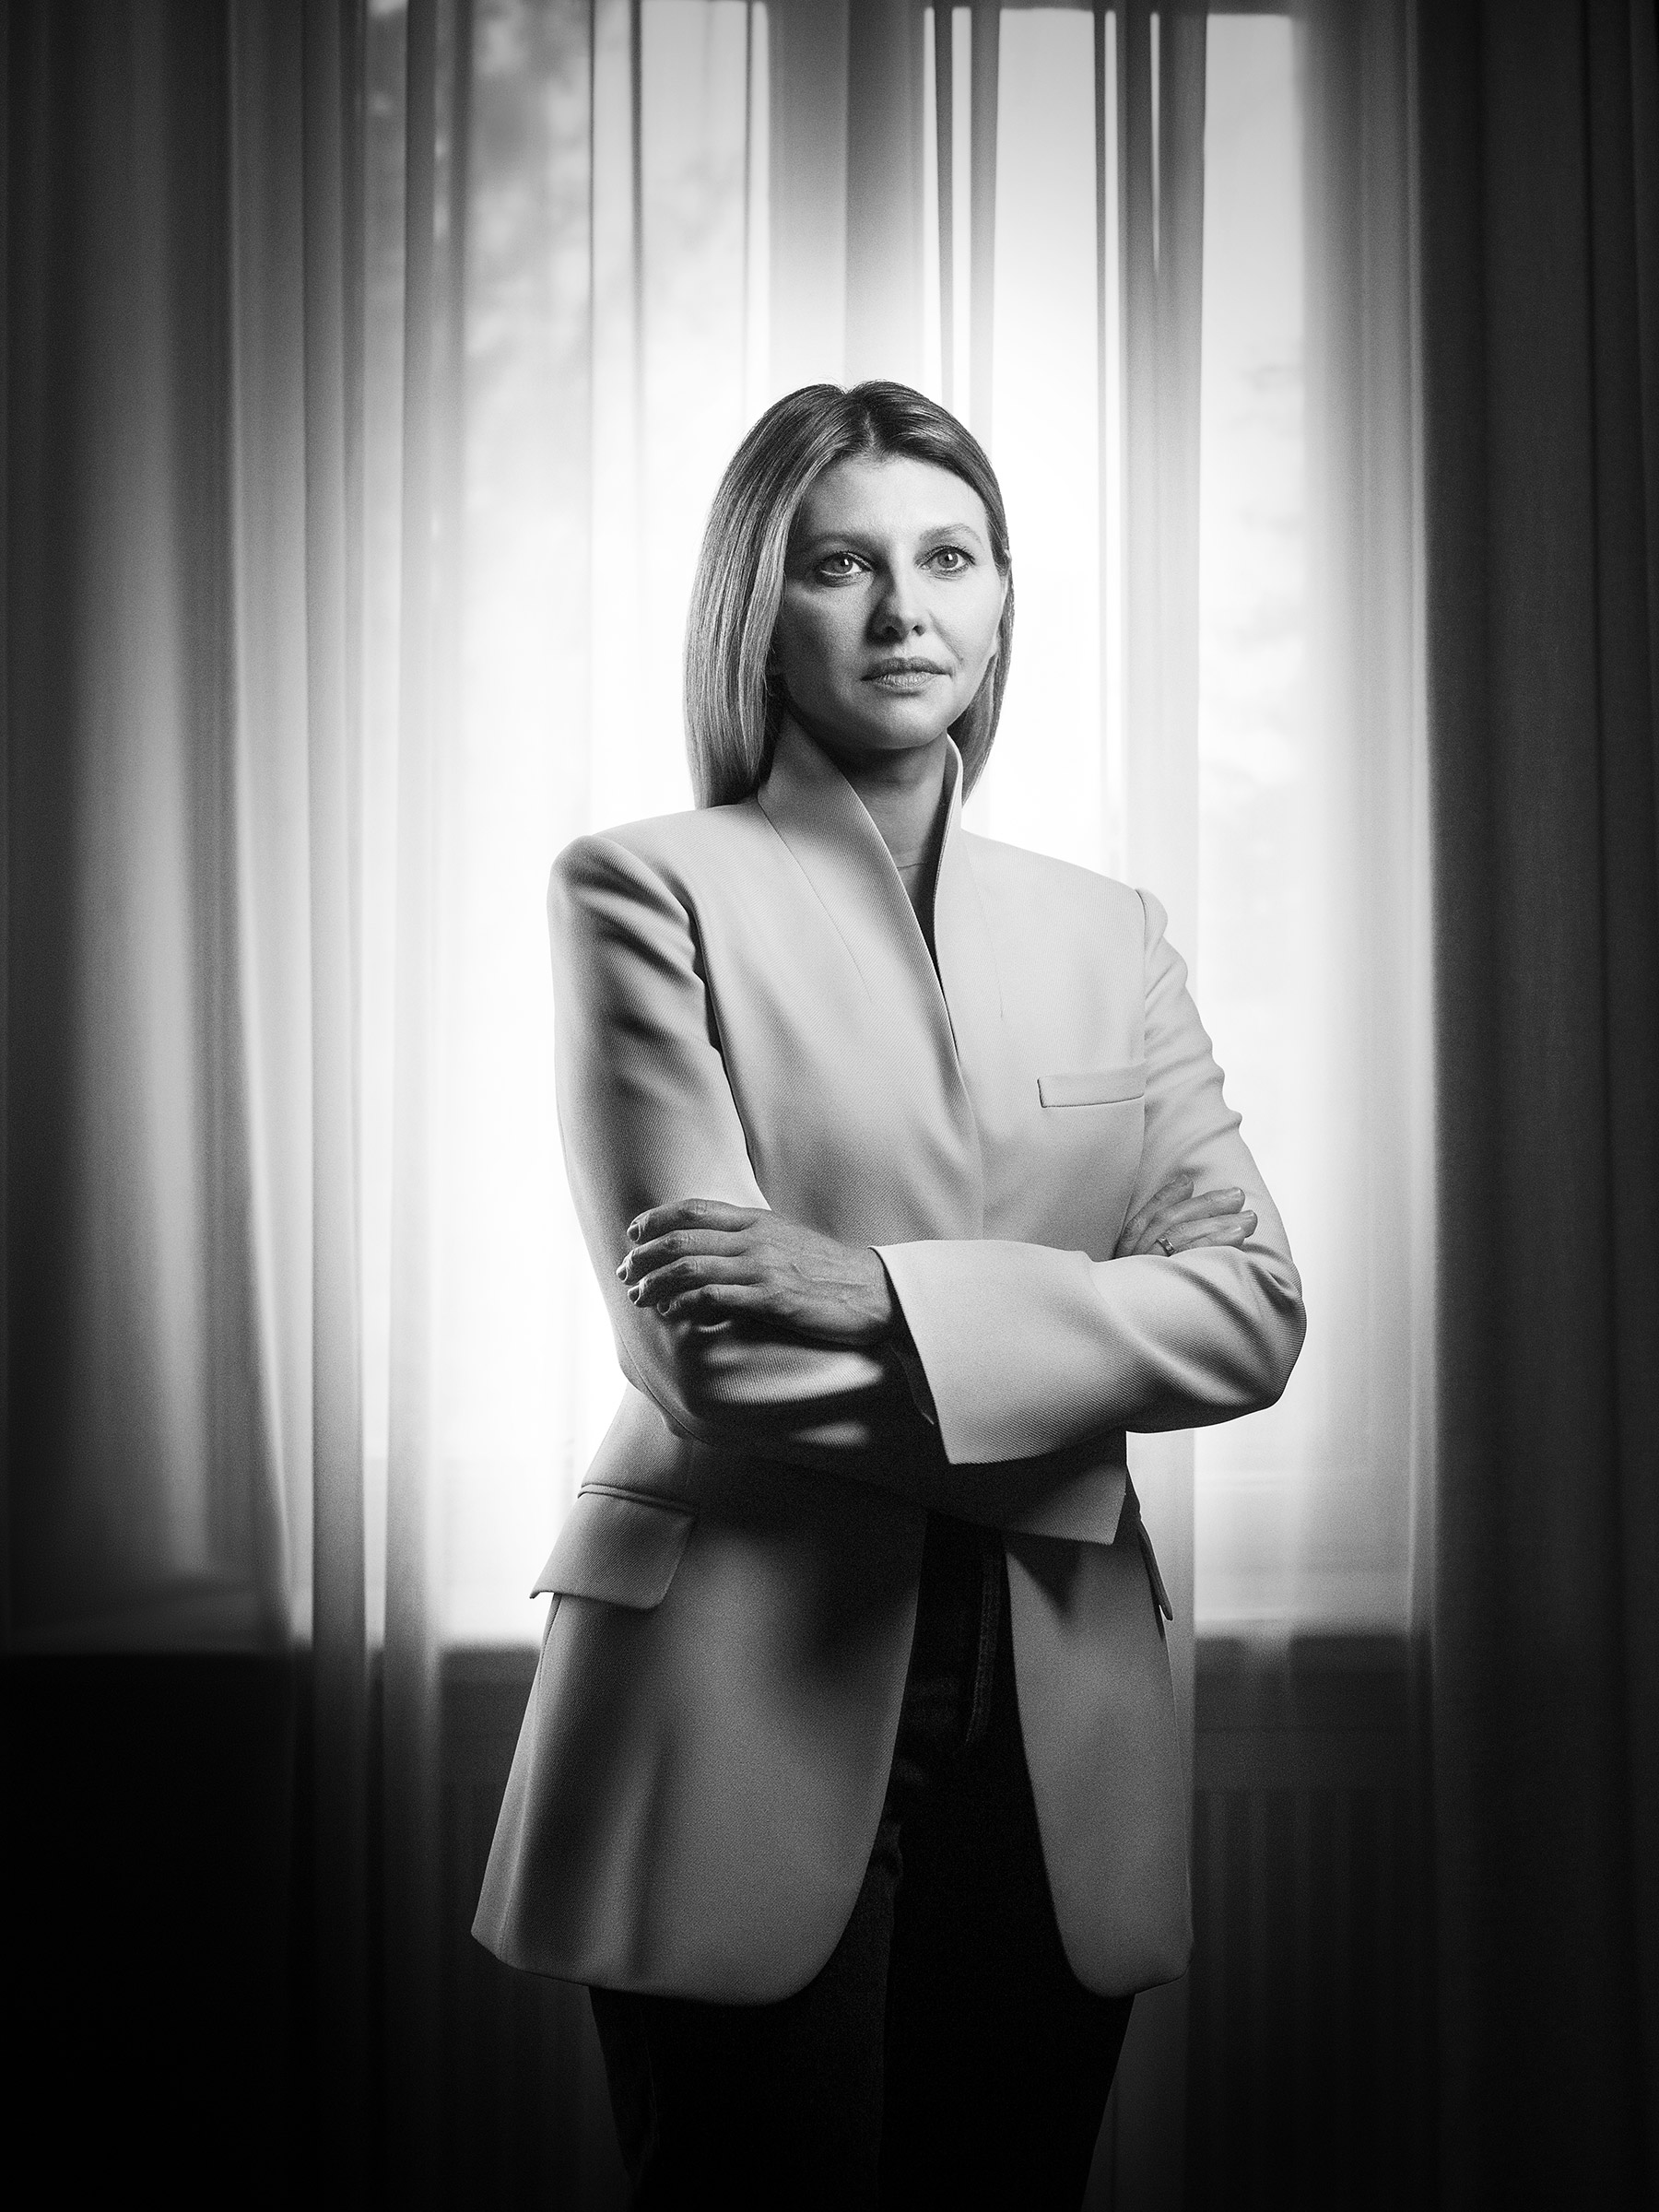 Olena Zelenska in her office at the presidential compound in Kyiv (Alexander Chekmenev for TIME)